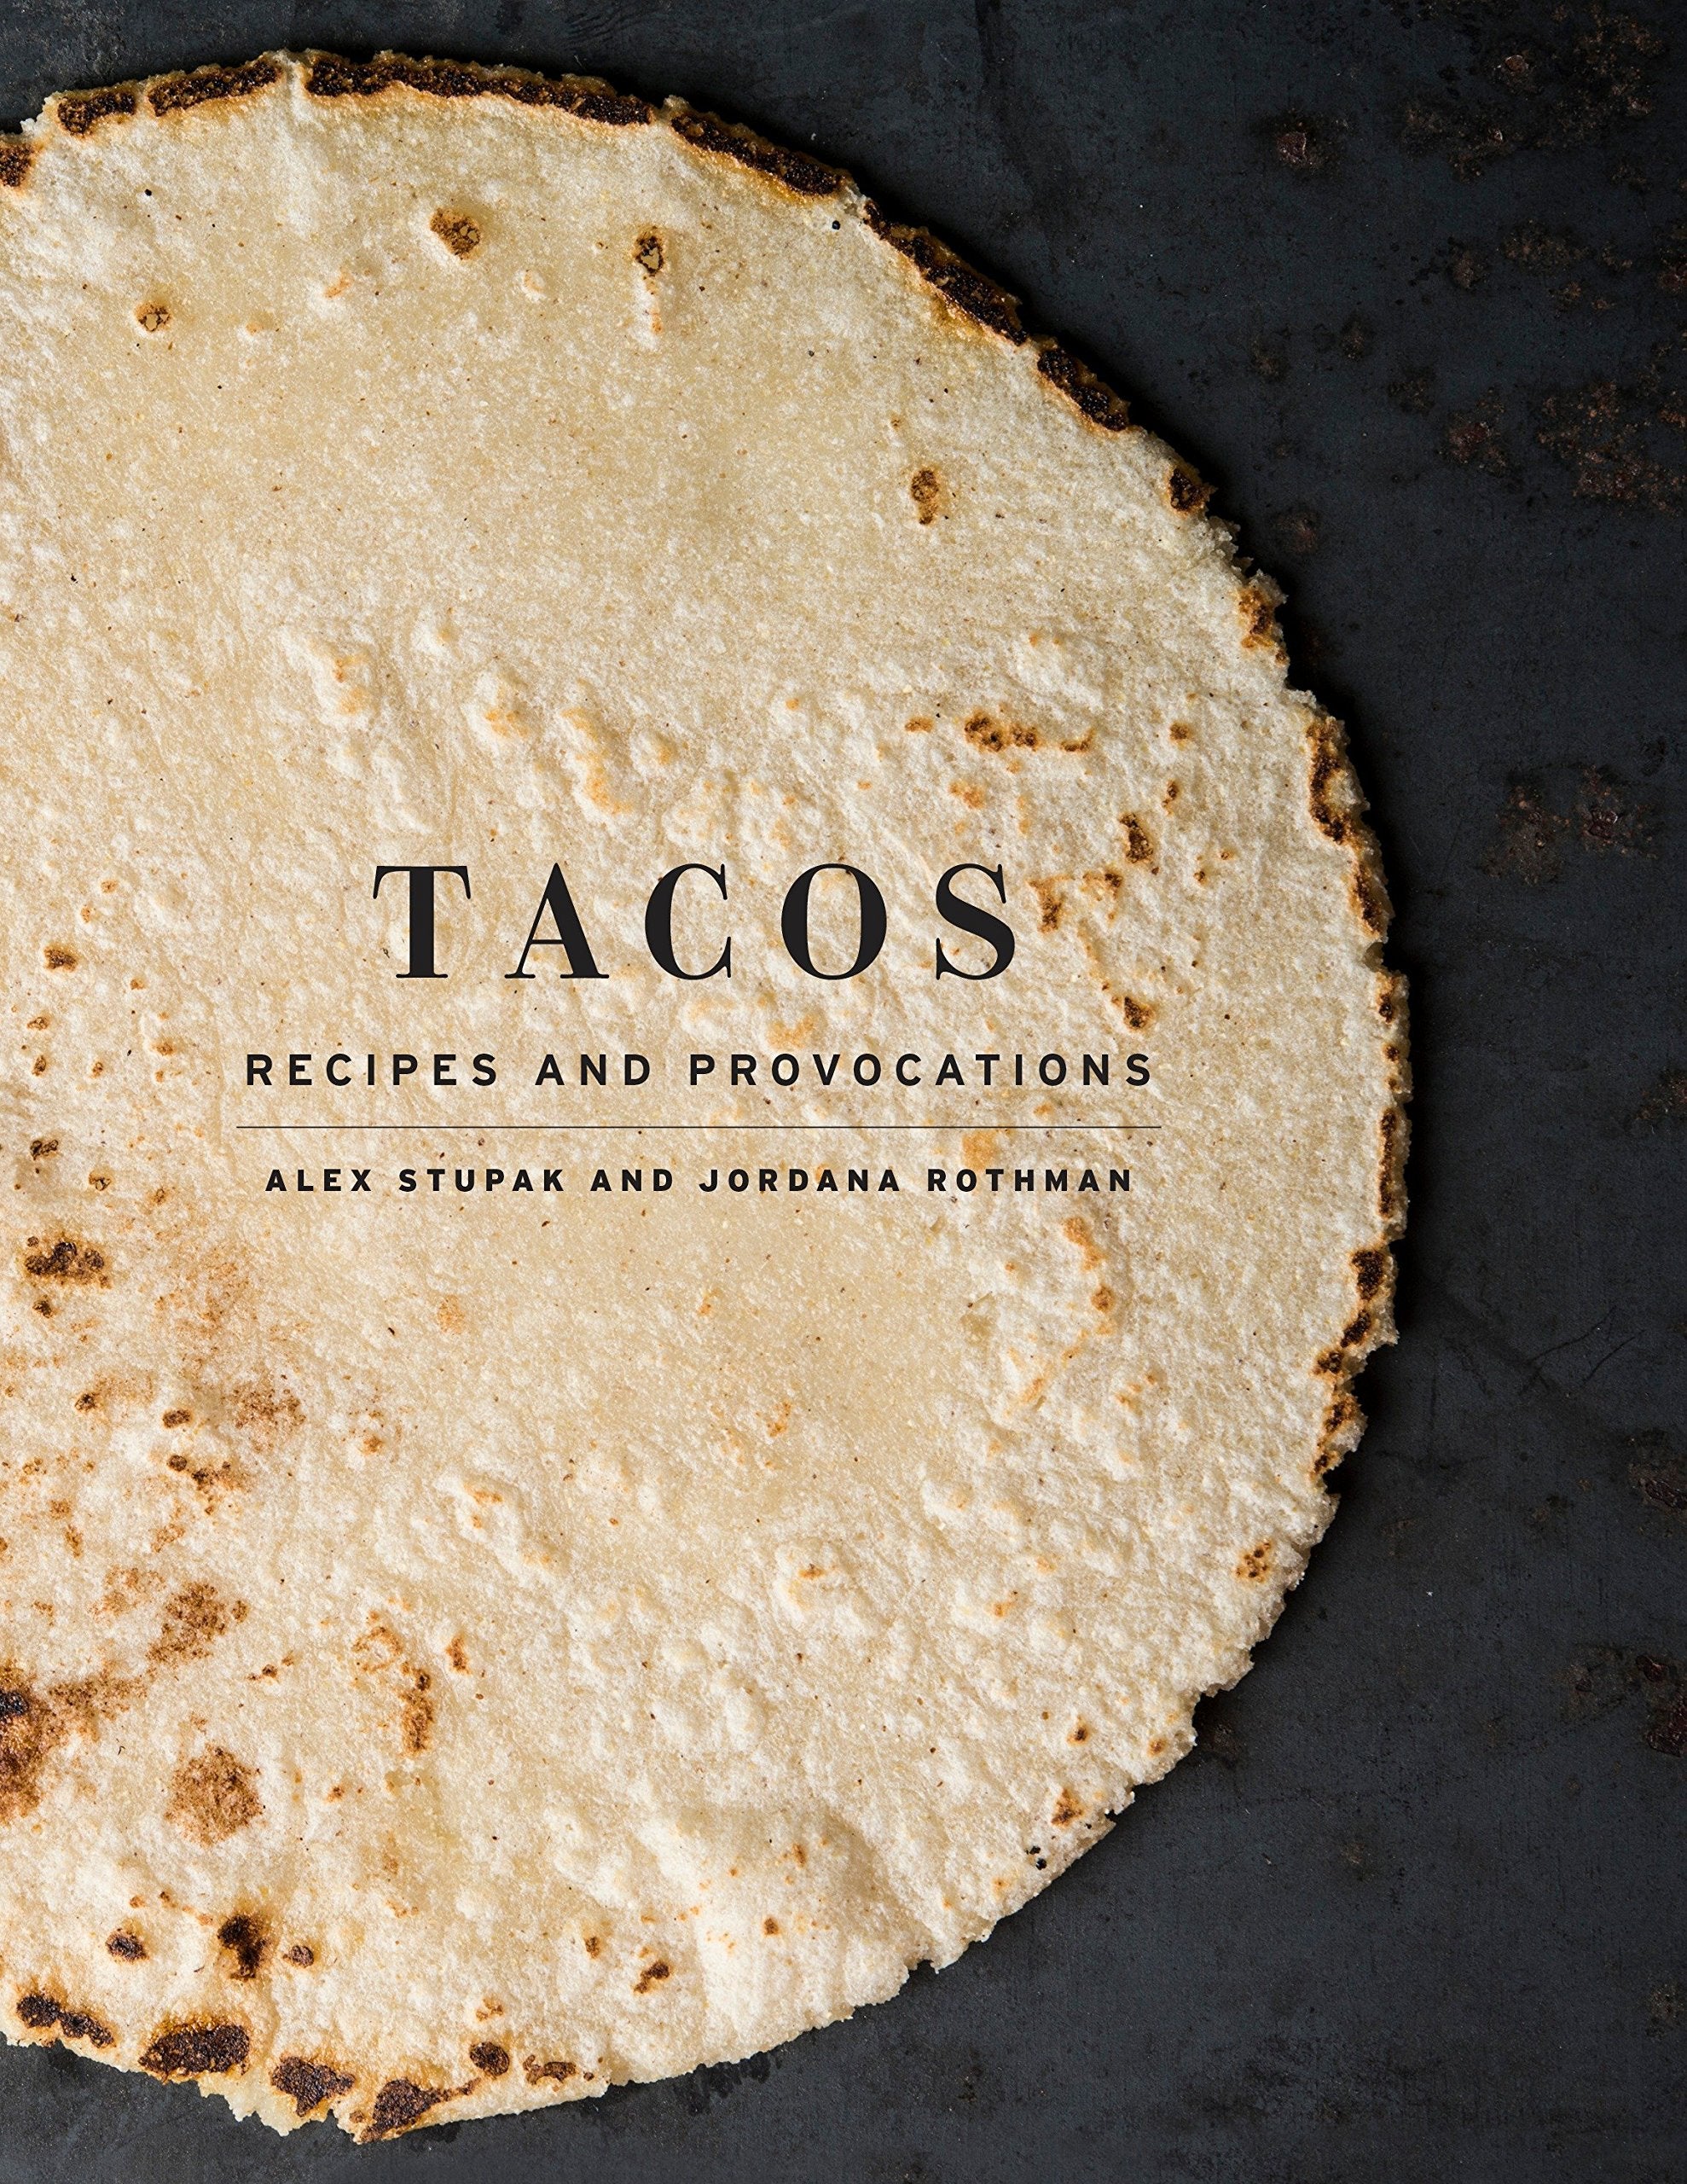 Tacos: Recipes and Provocations (Alex Stupak, Jordana Rothman)